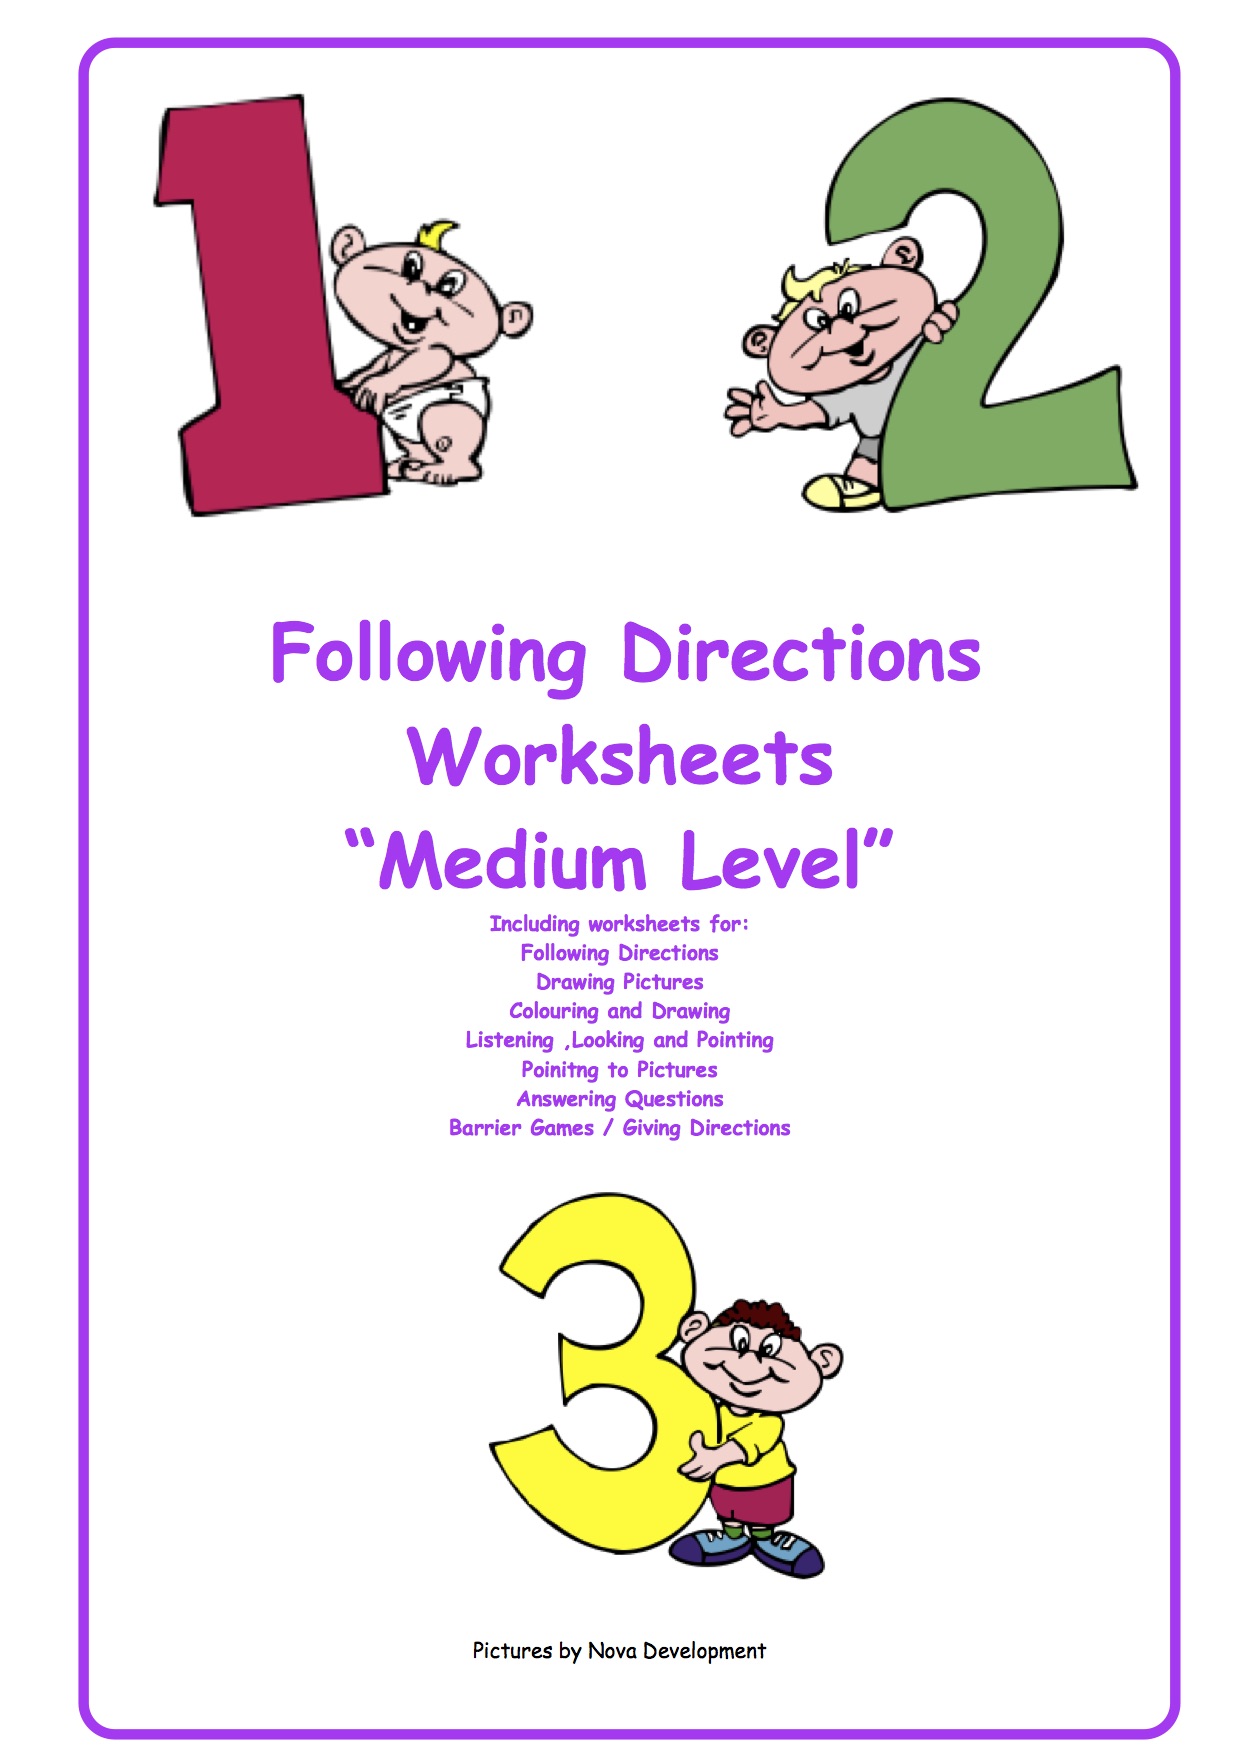 Following Directions - Medium level - mixed